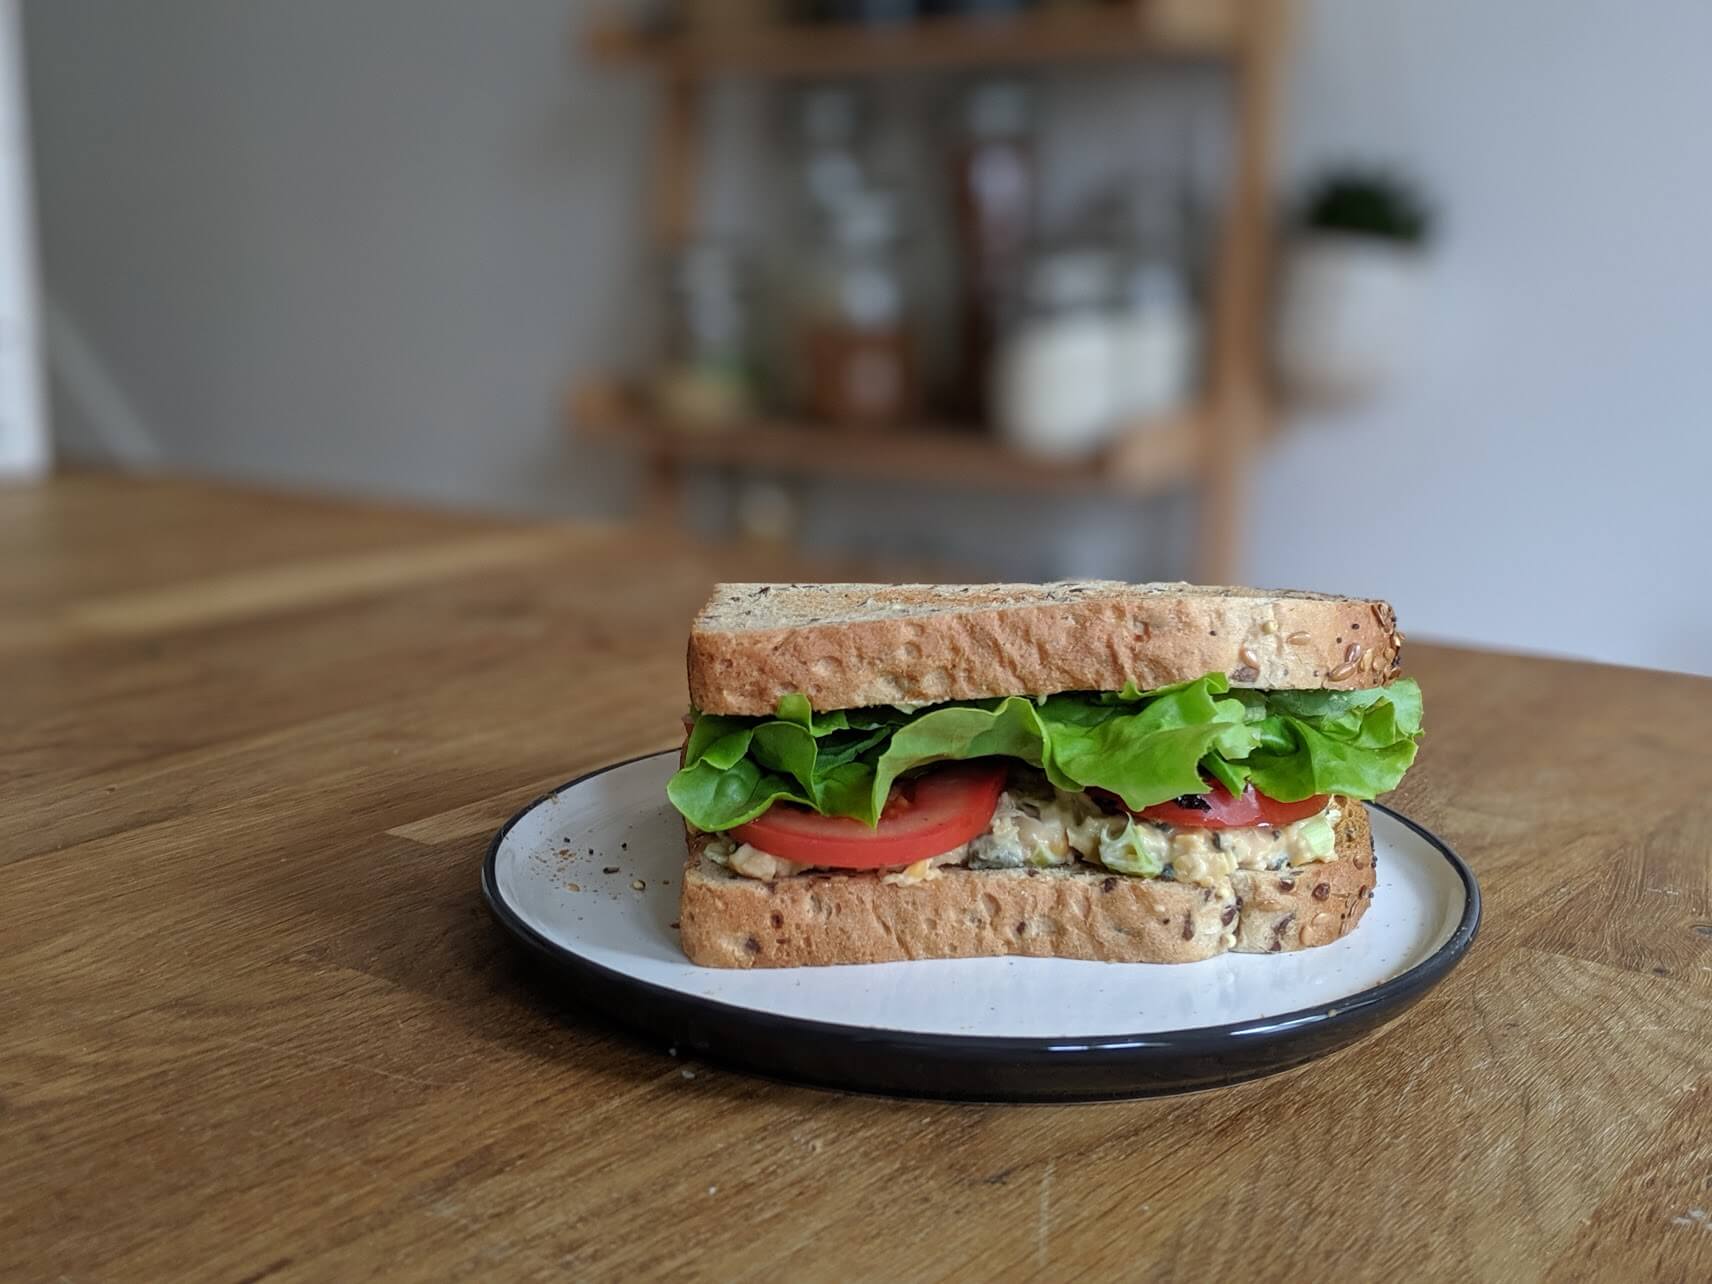 Lunch sandwich complete